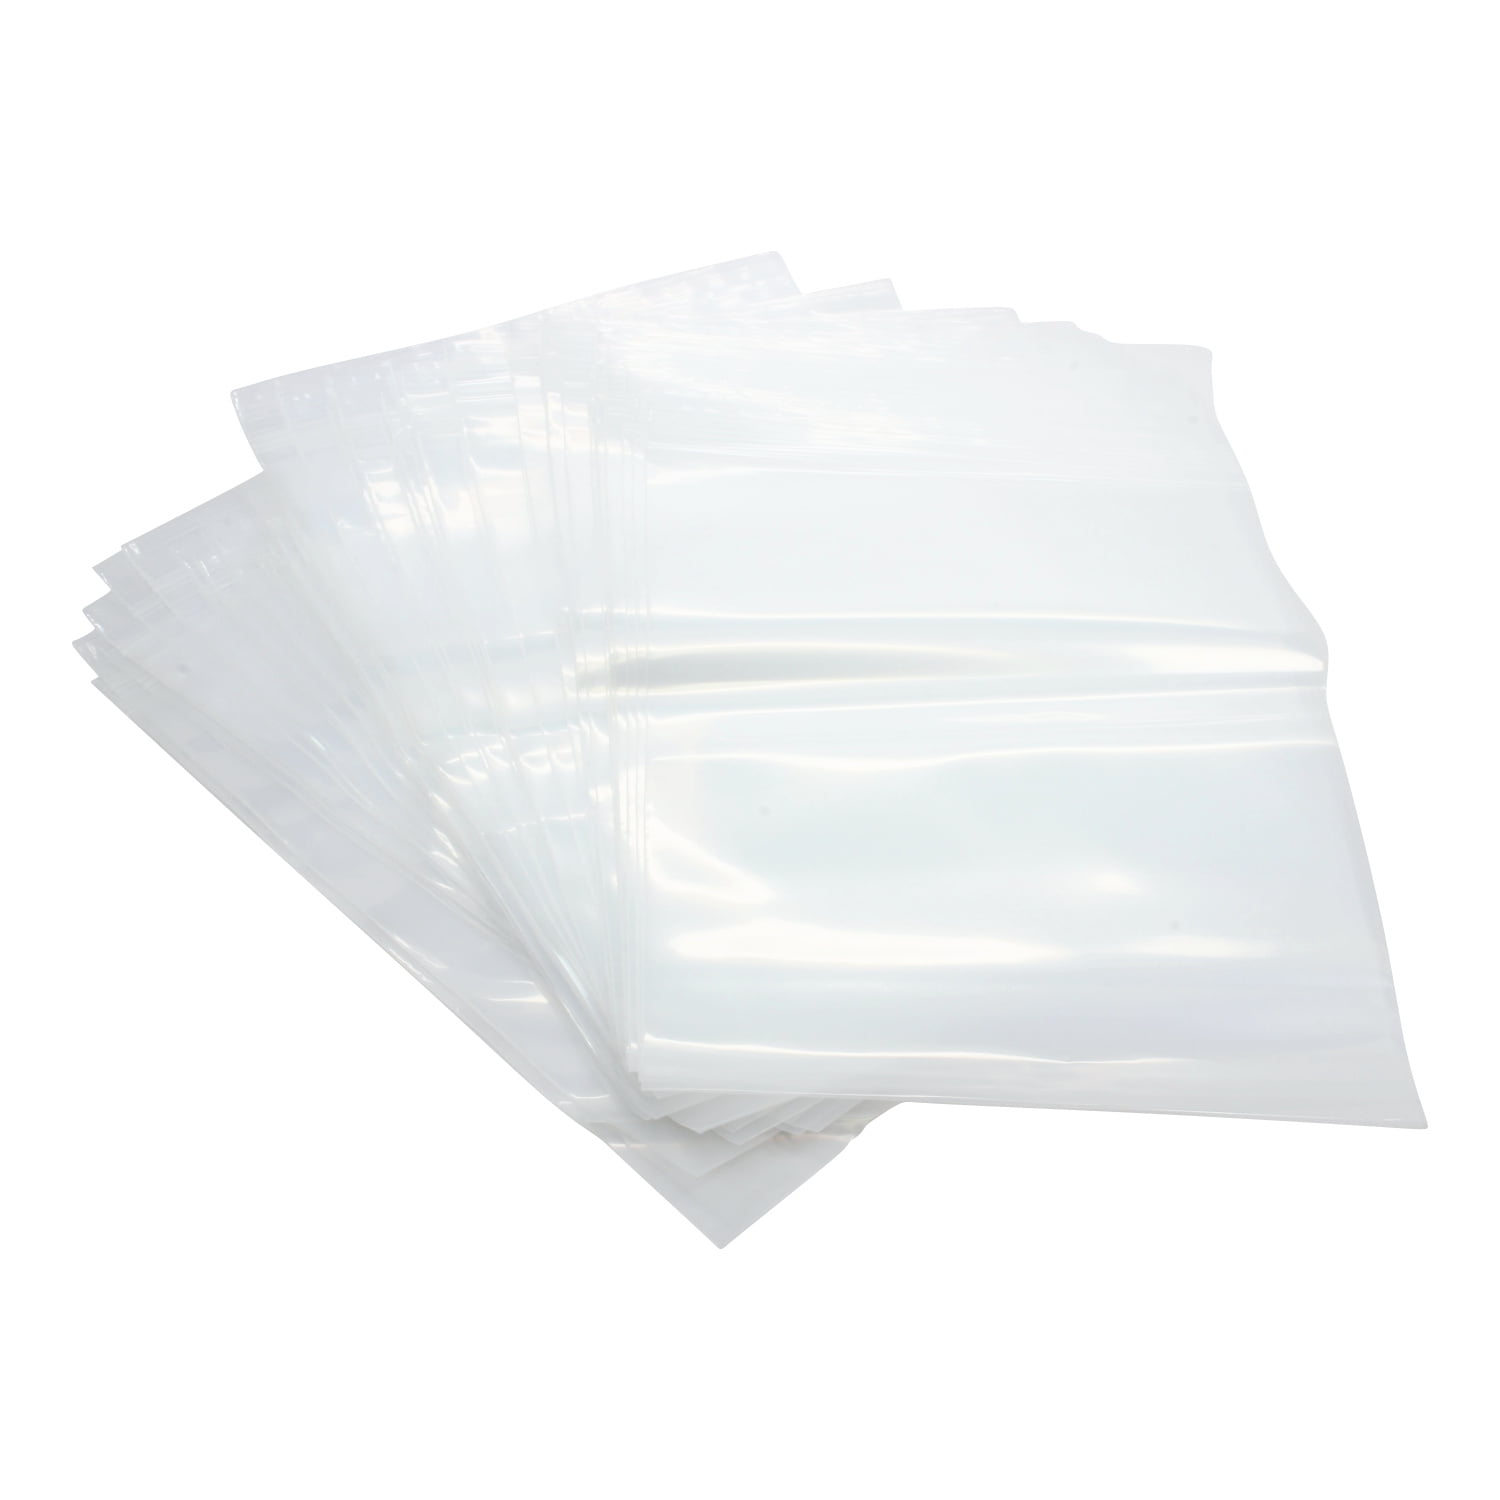 200 ziplock storage bags transparent plastic zipper bags BEB 